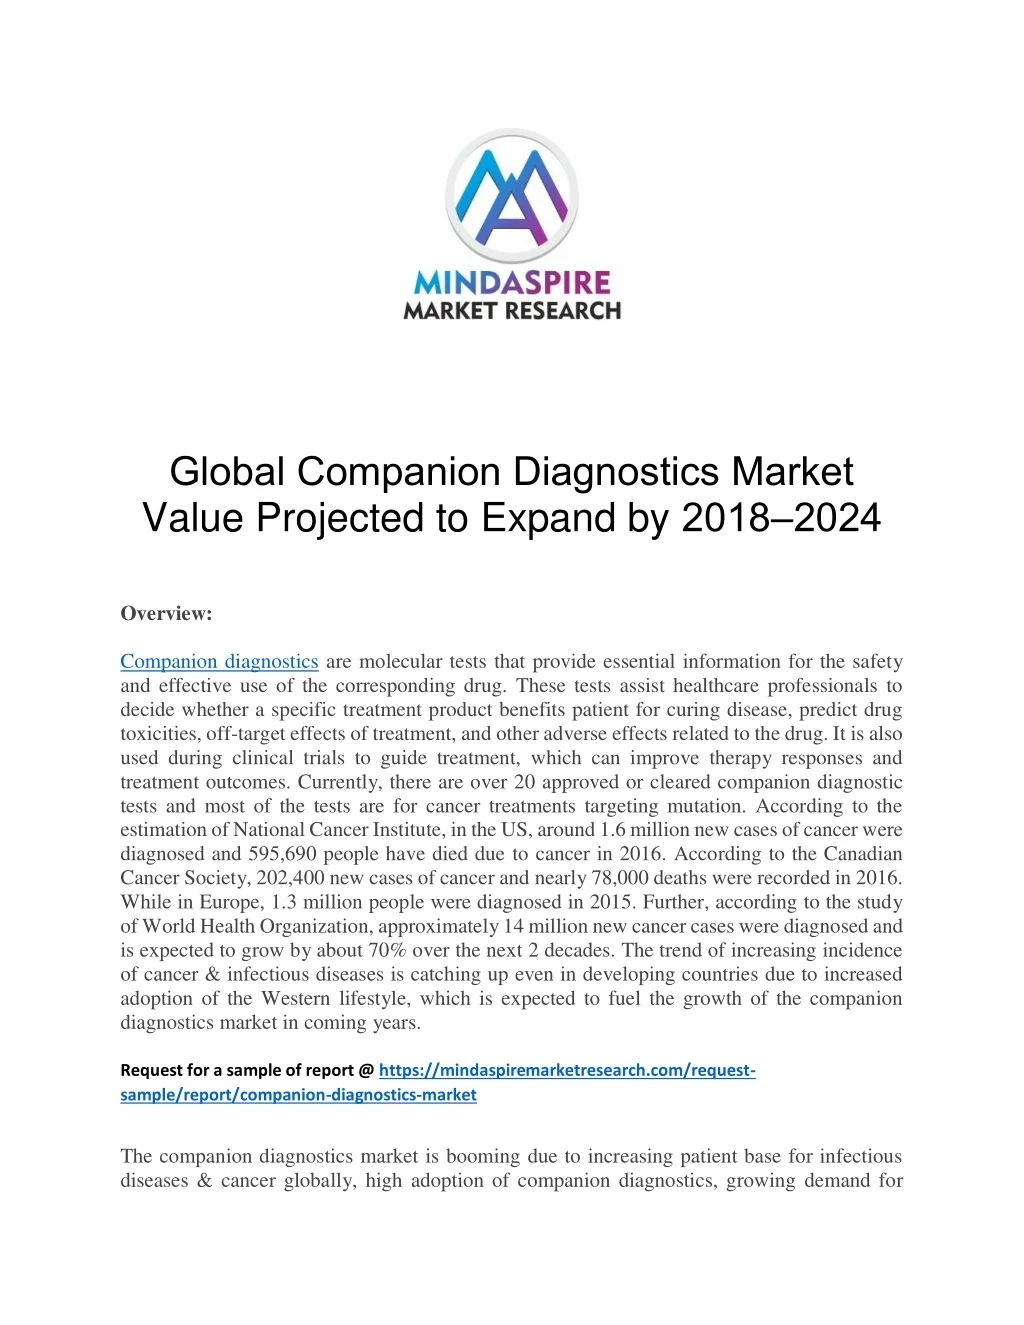 global companion diagnostics market value